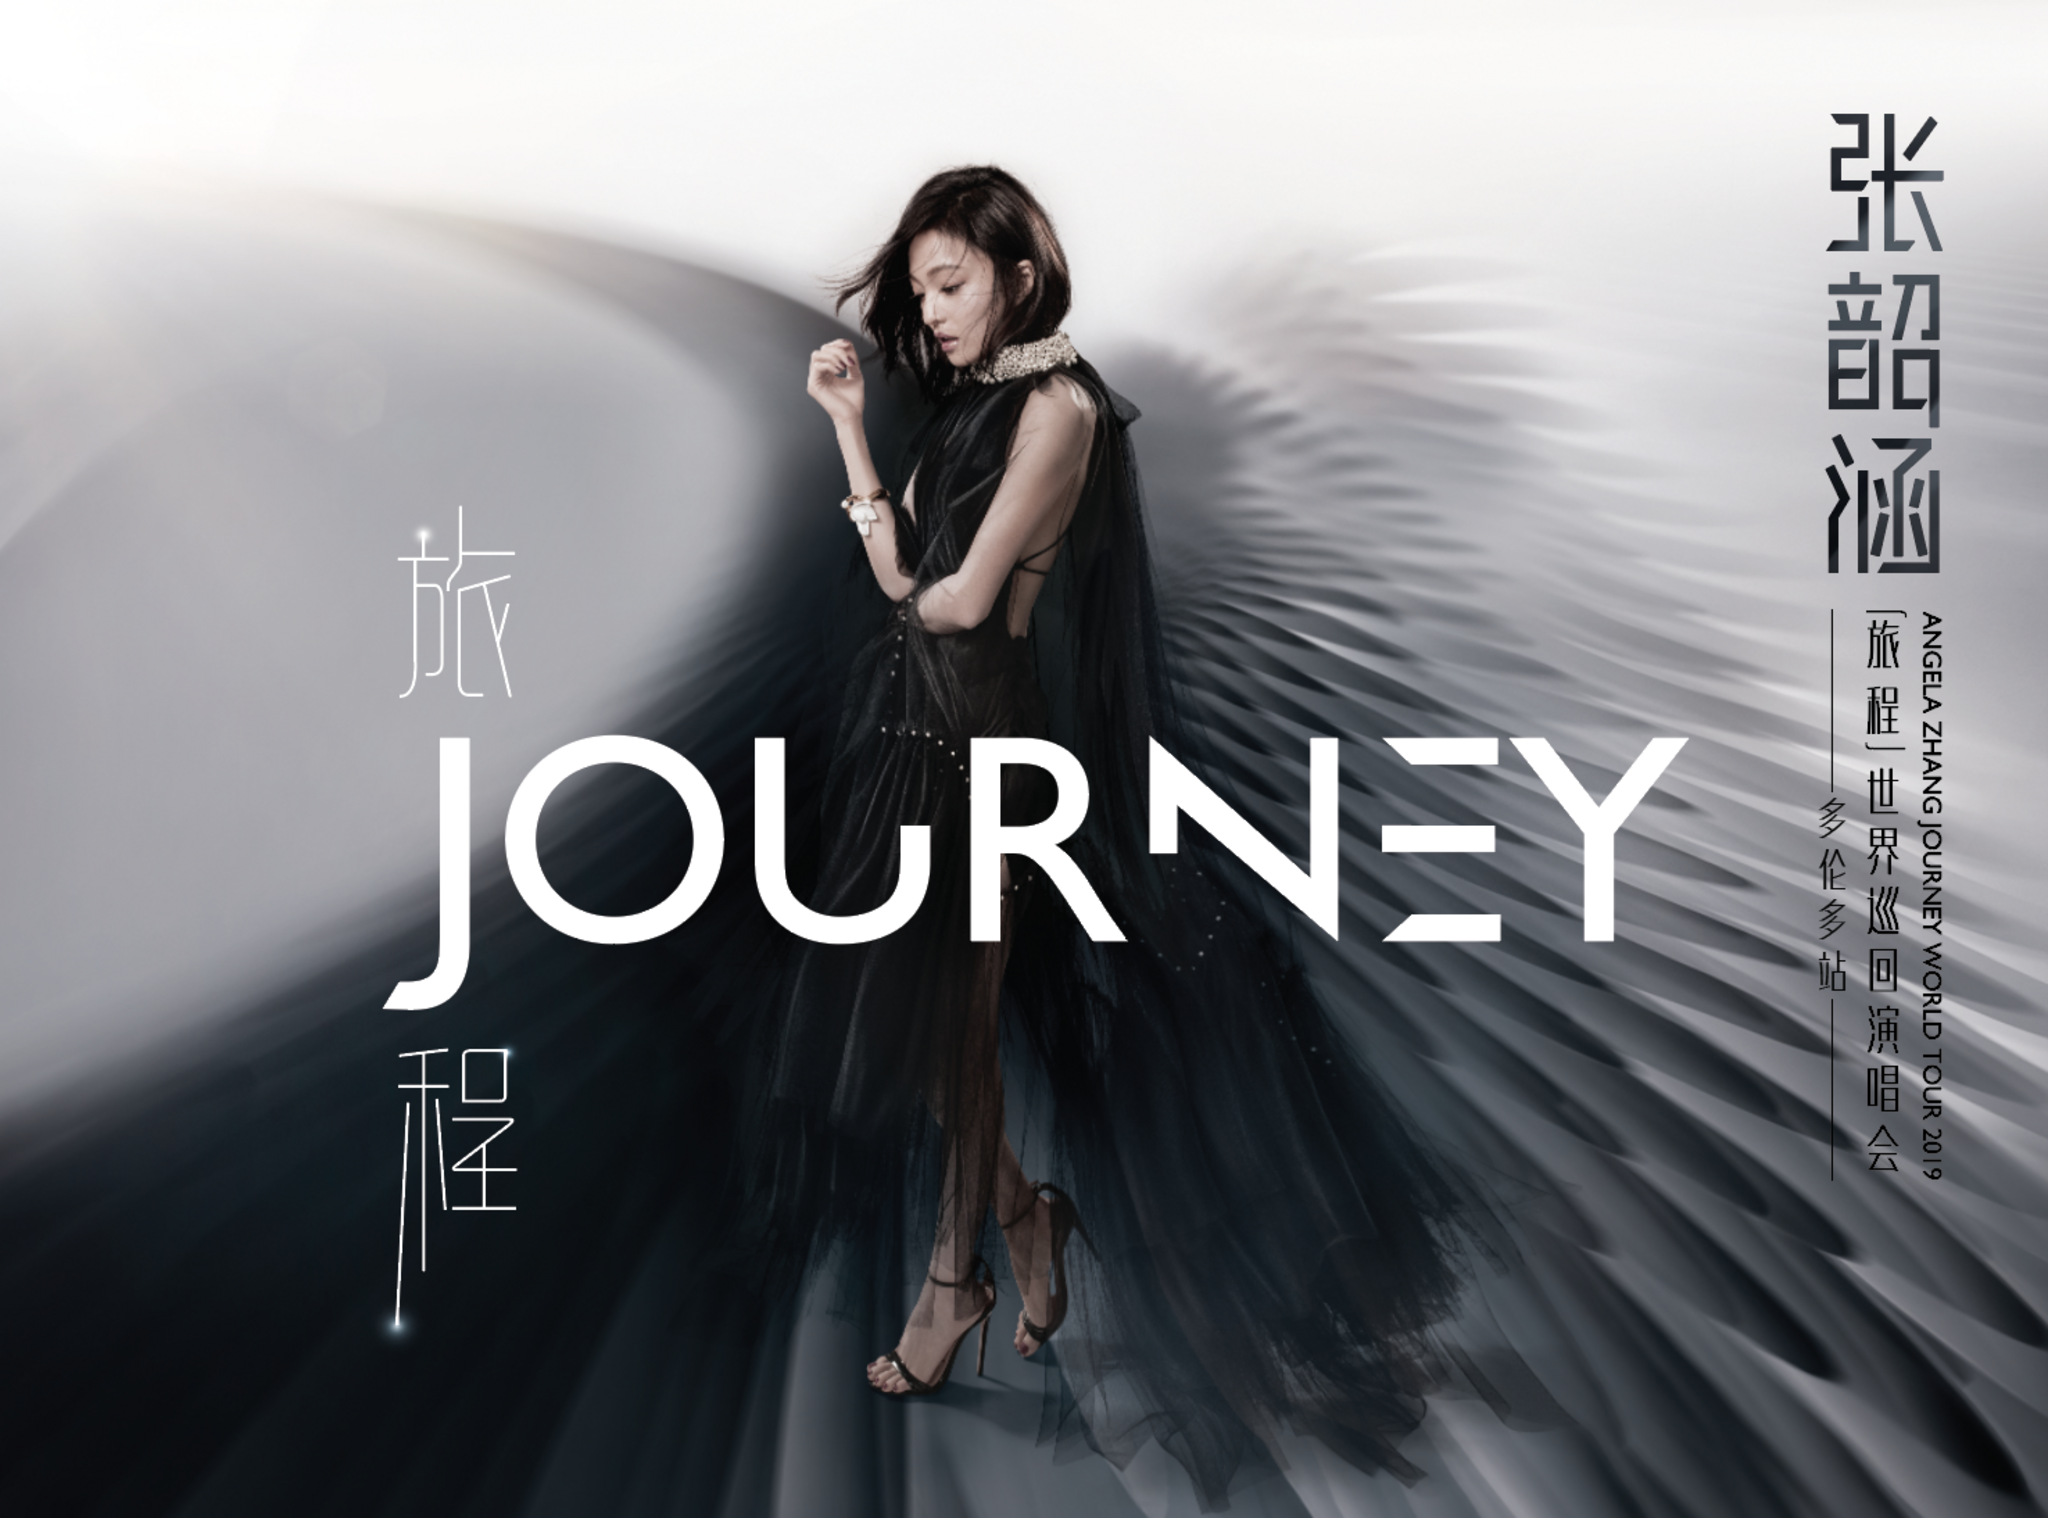 arti lagu journey angela zhang